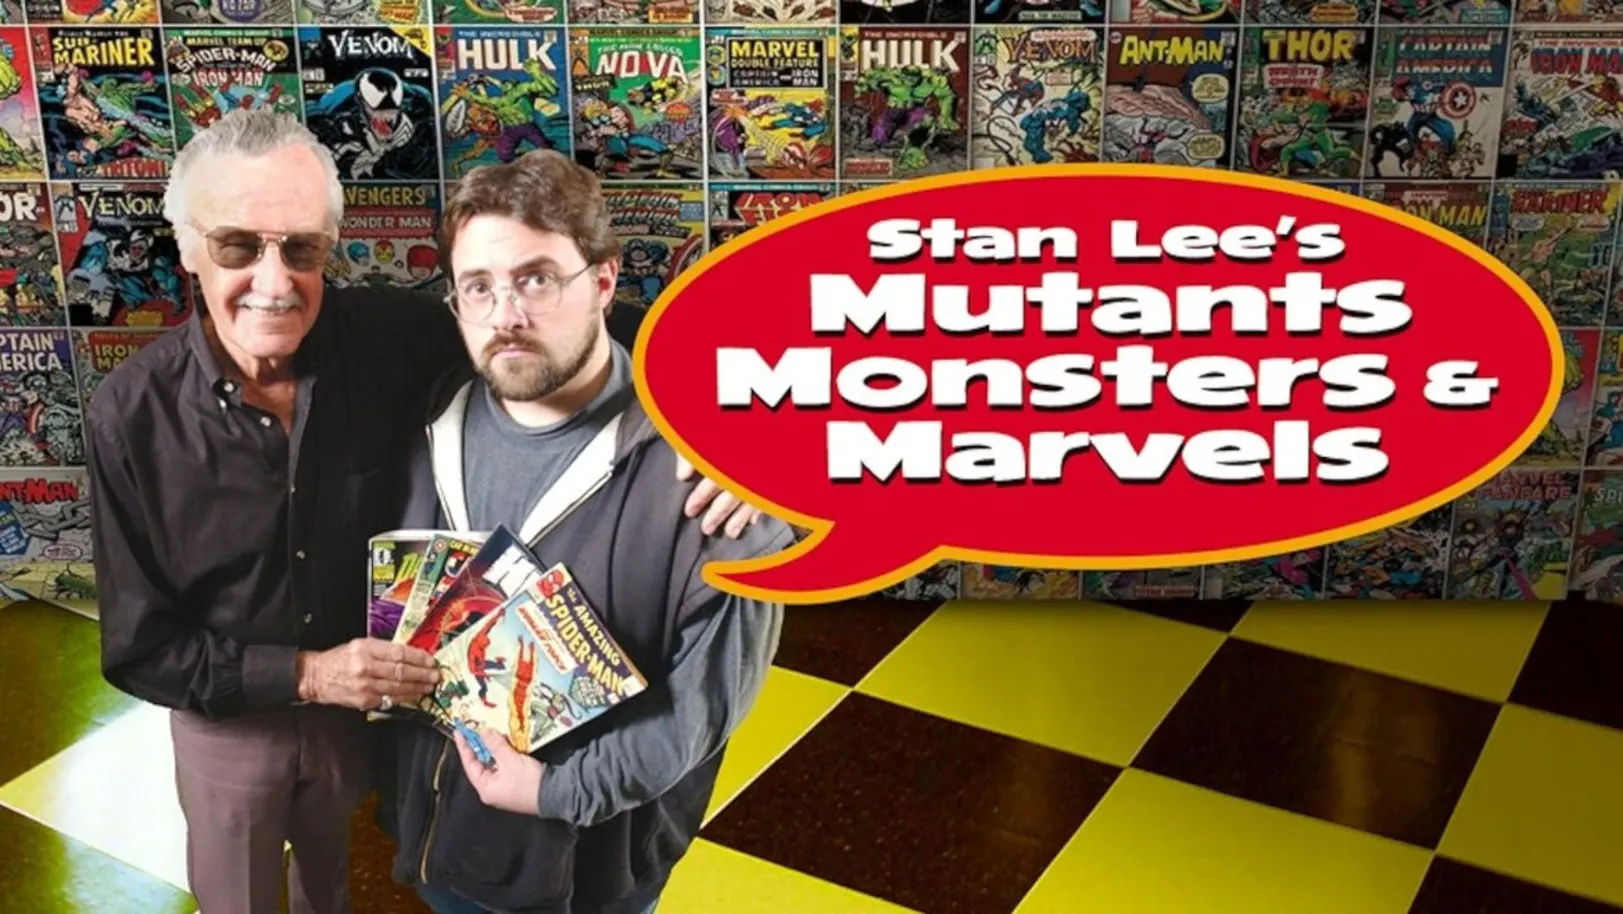 Stan Lee's Mutants, Monsters & Marvels Streaming Now On &Prive HD